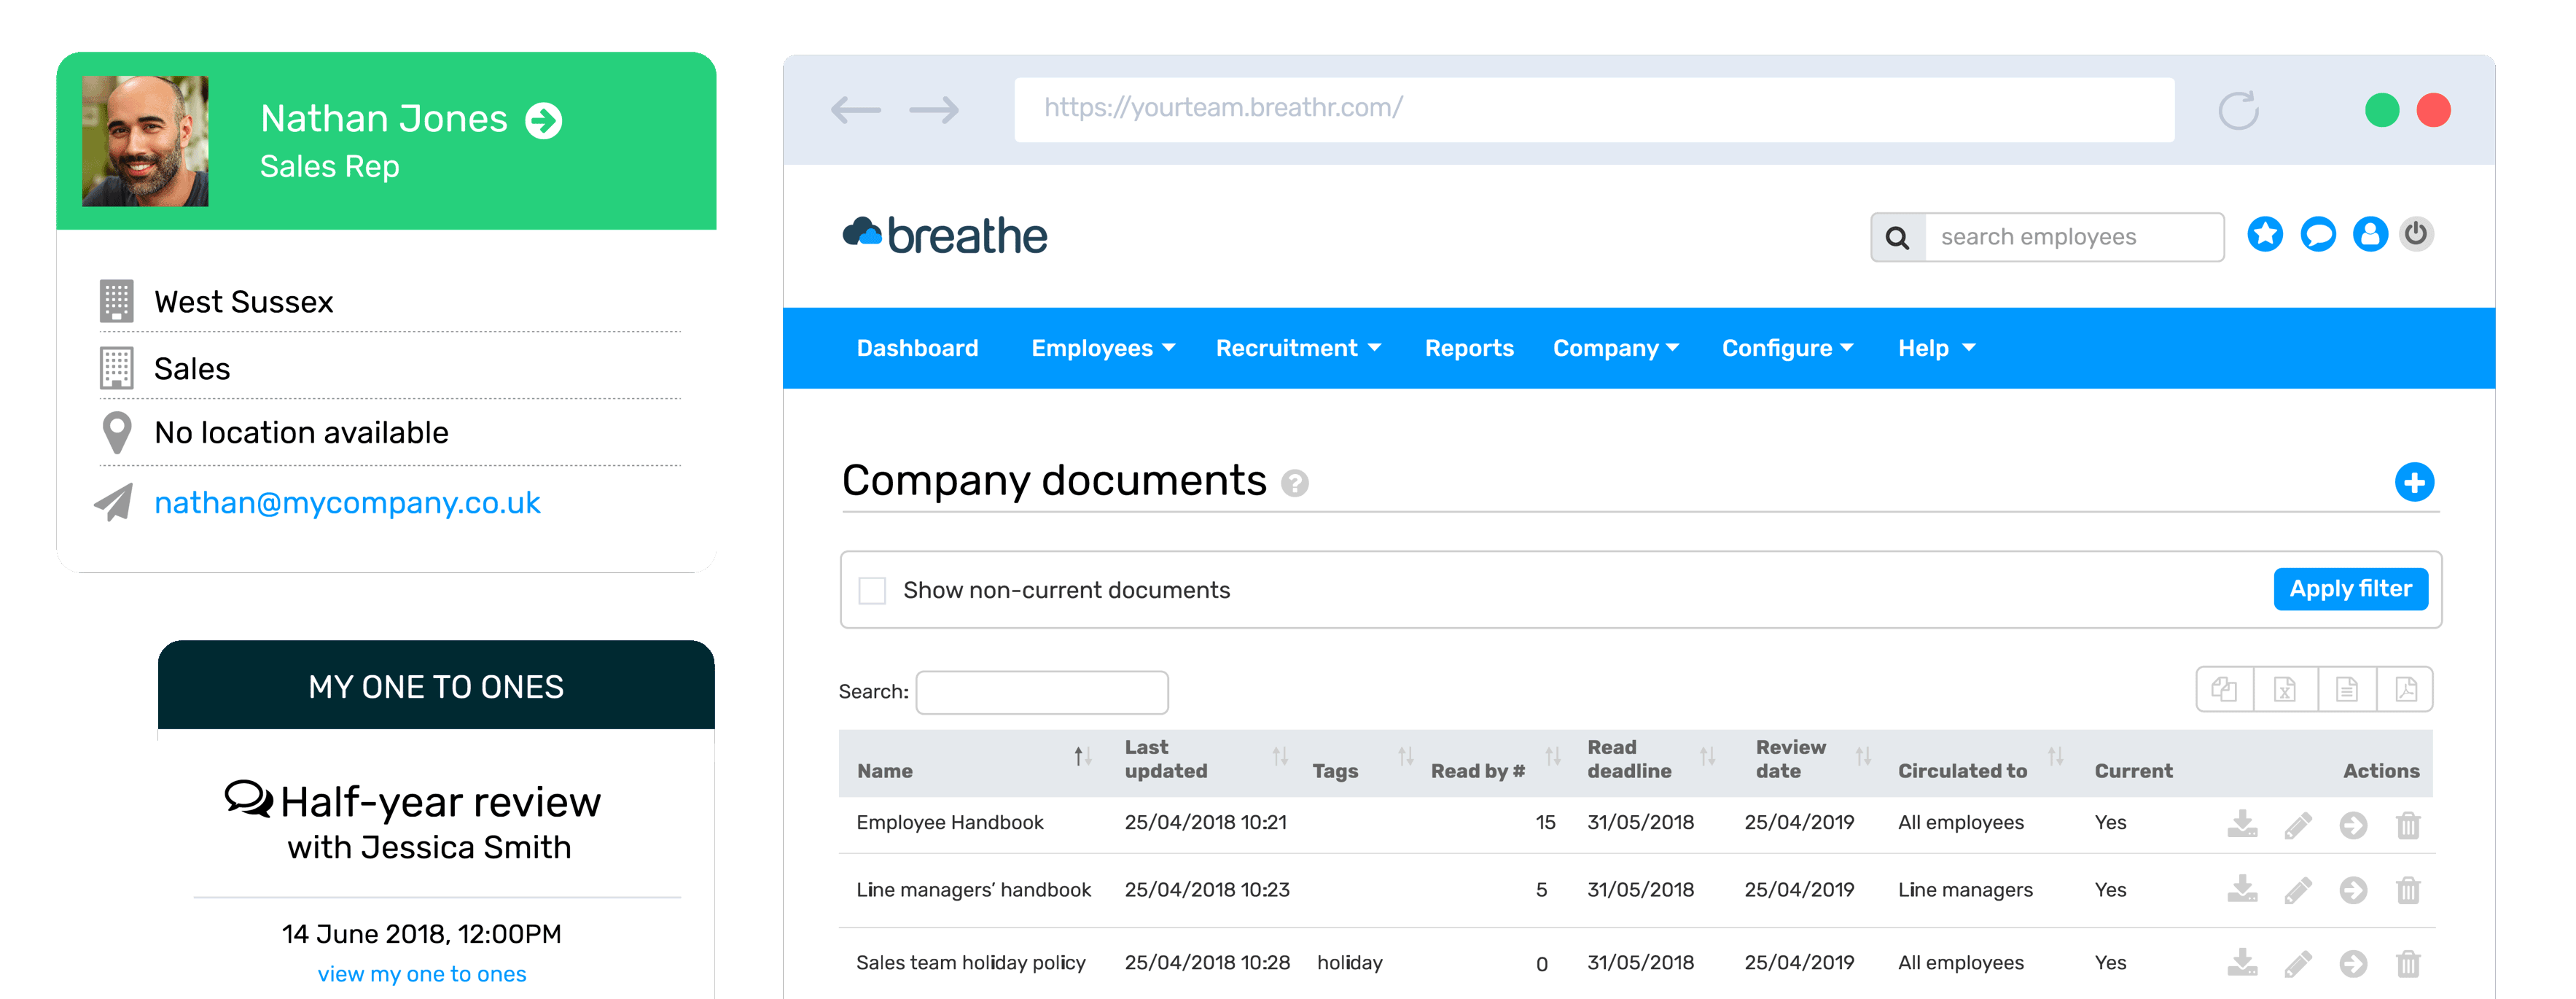 breathe_user_interface_group@2x-1